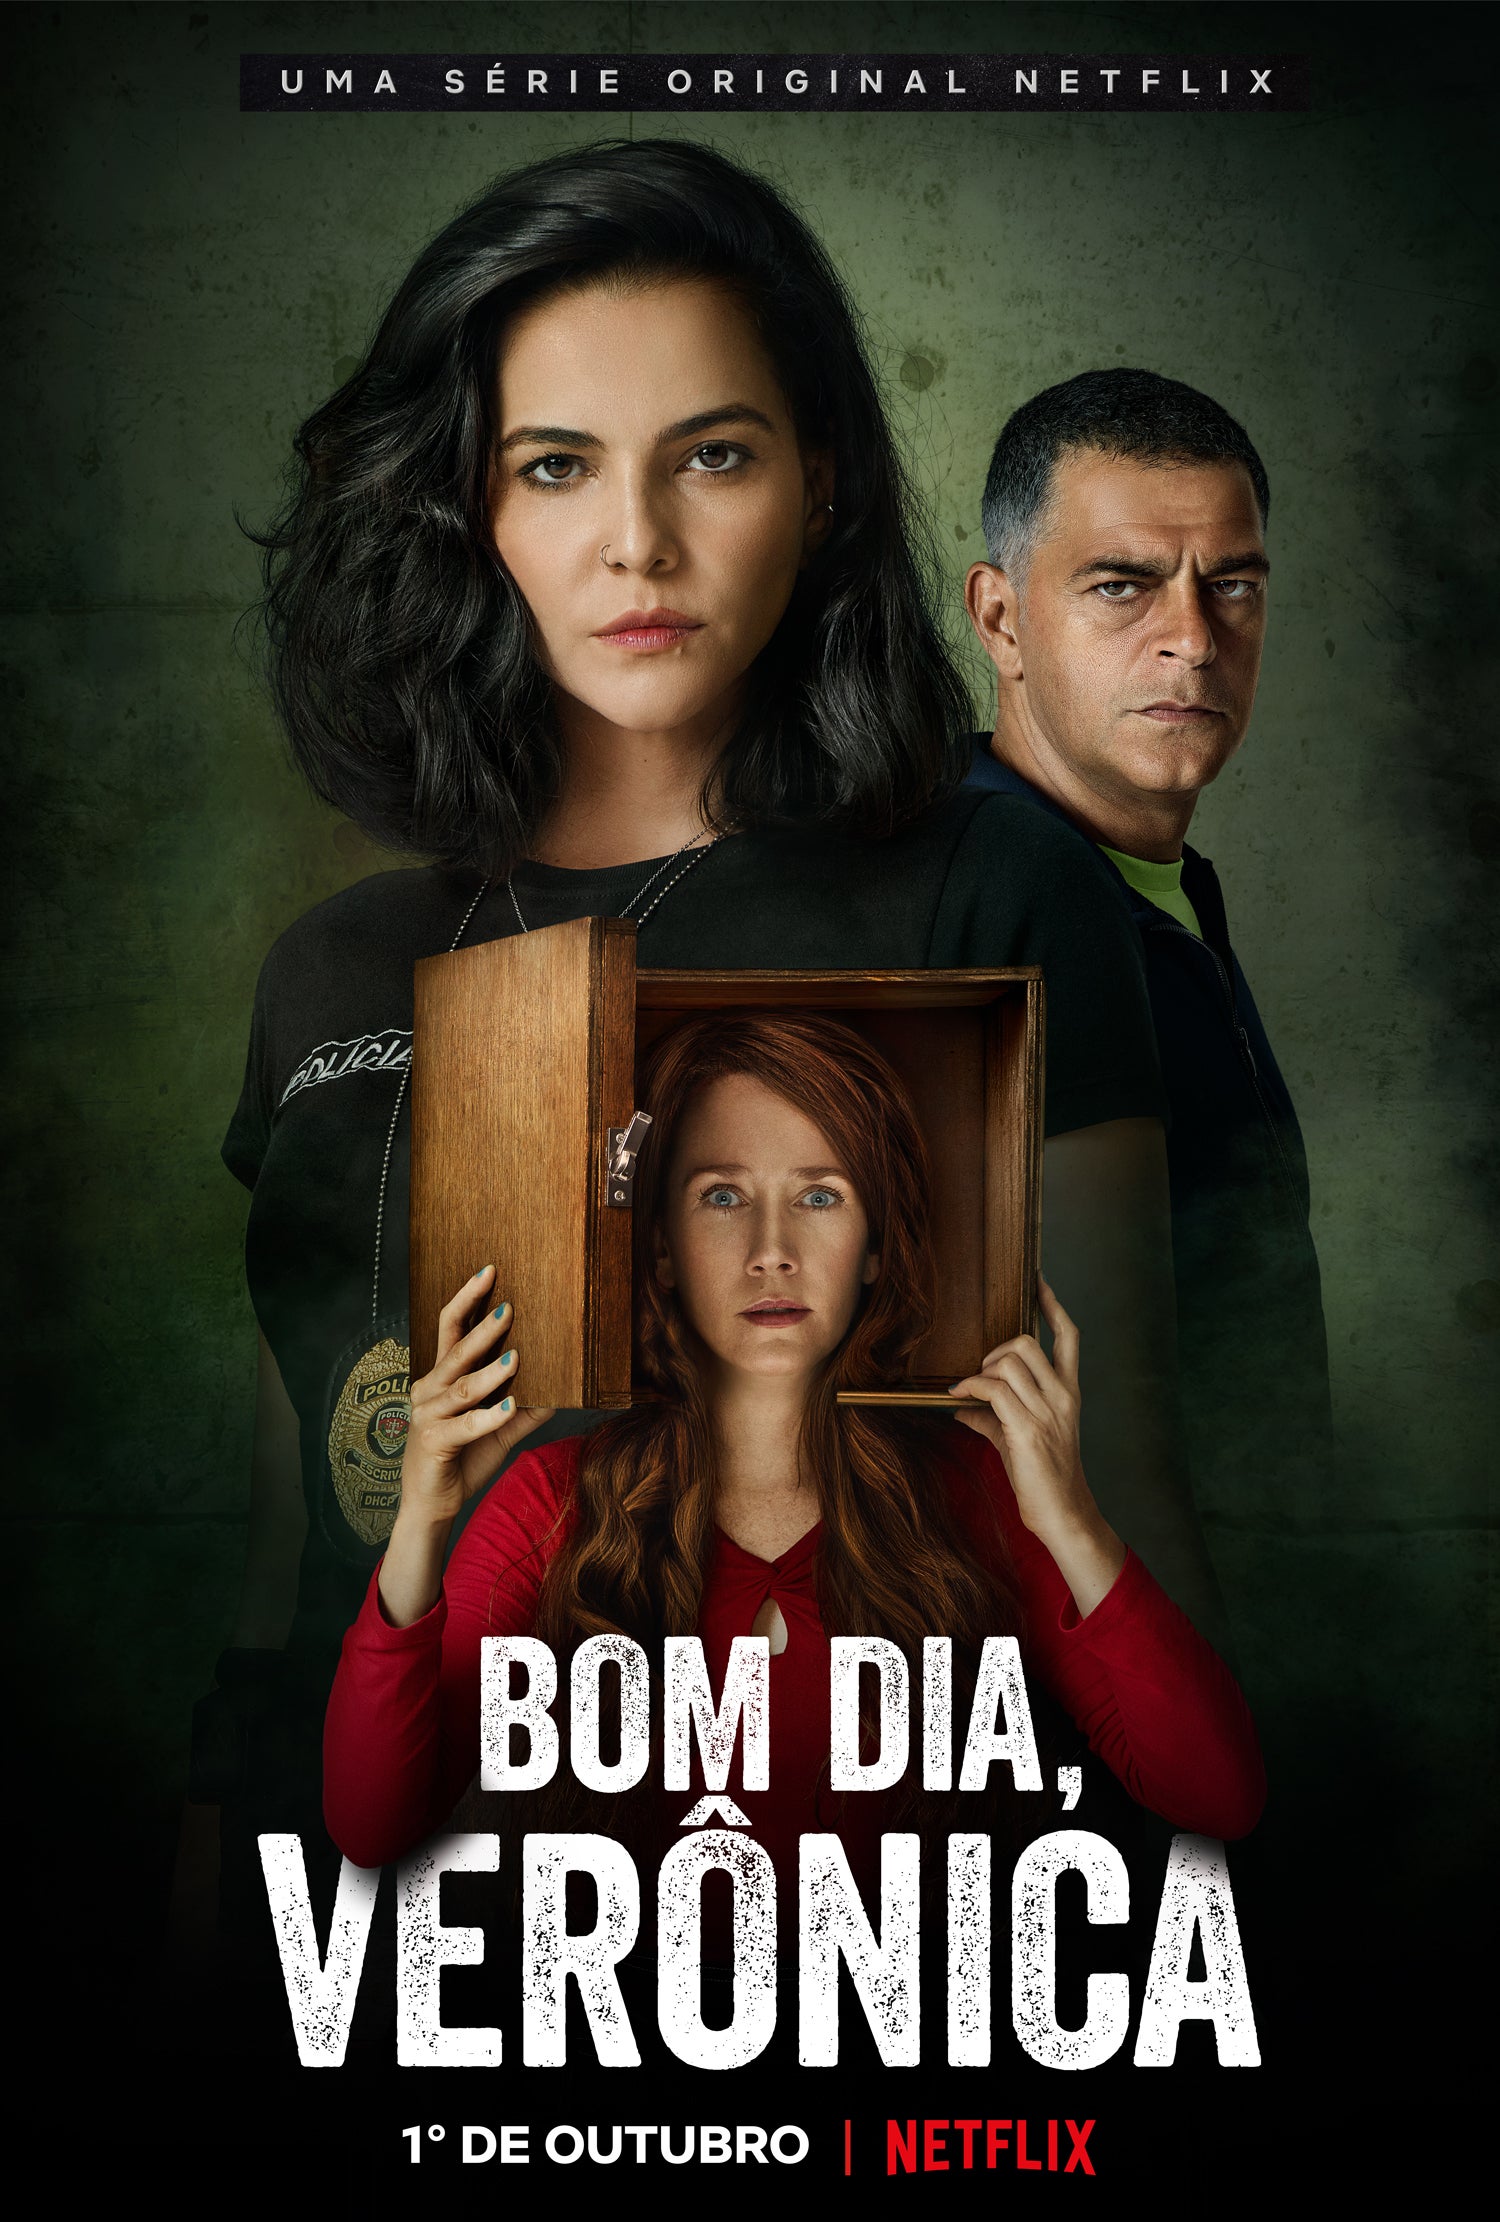 TV ratings for Bom Dia, Verônica in Brazil. Netflix TV series